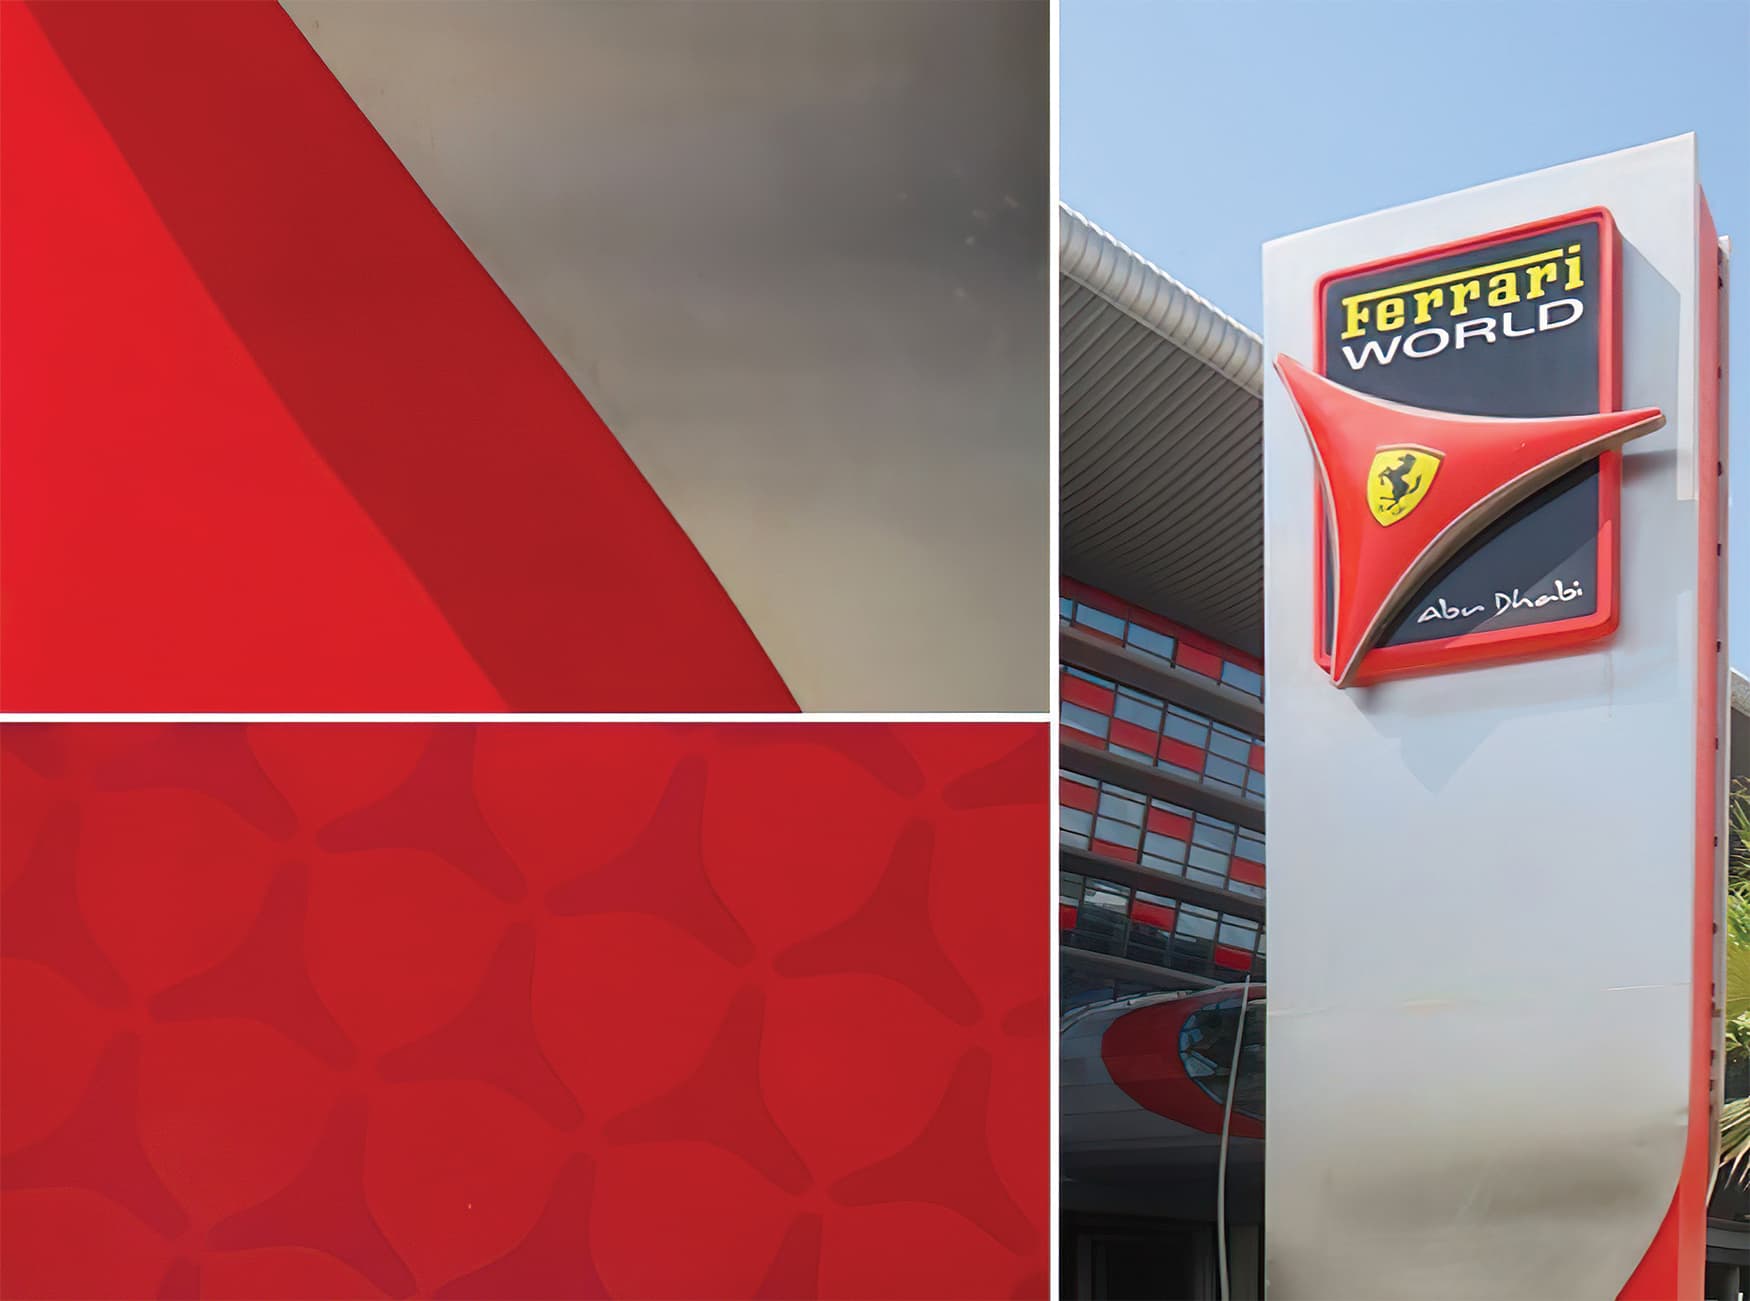 Ferrari World in Abu Dhabi in the United Arab Emirates. Project Identity Totem.